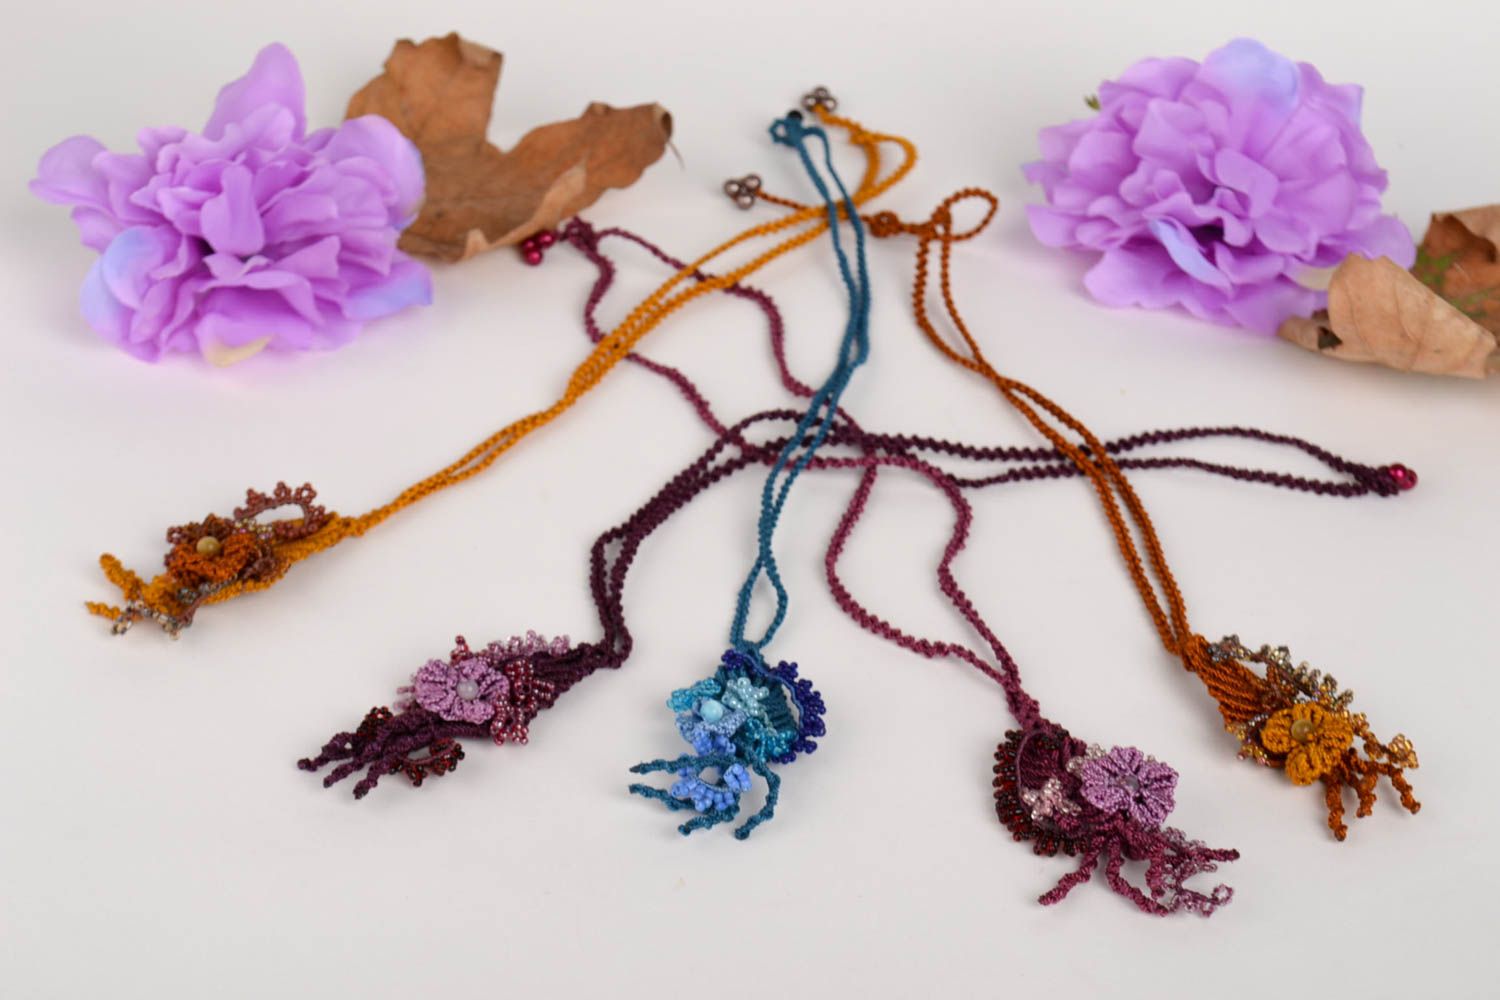 Handmade pendant fashion thread jewelry 5 pieces gift for women macrame ideas photo 1